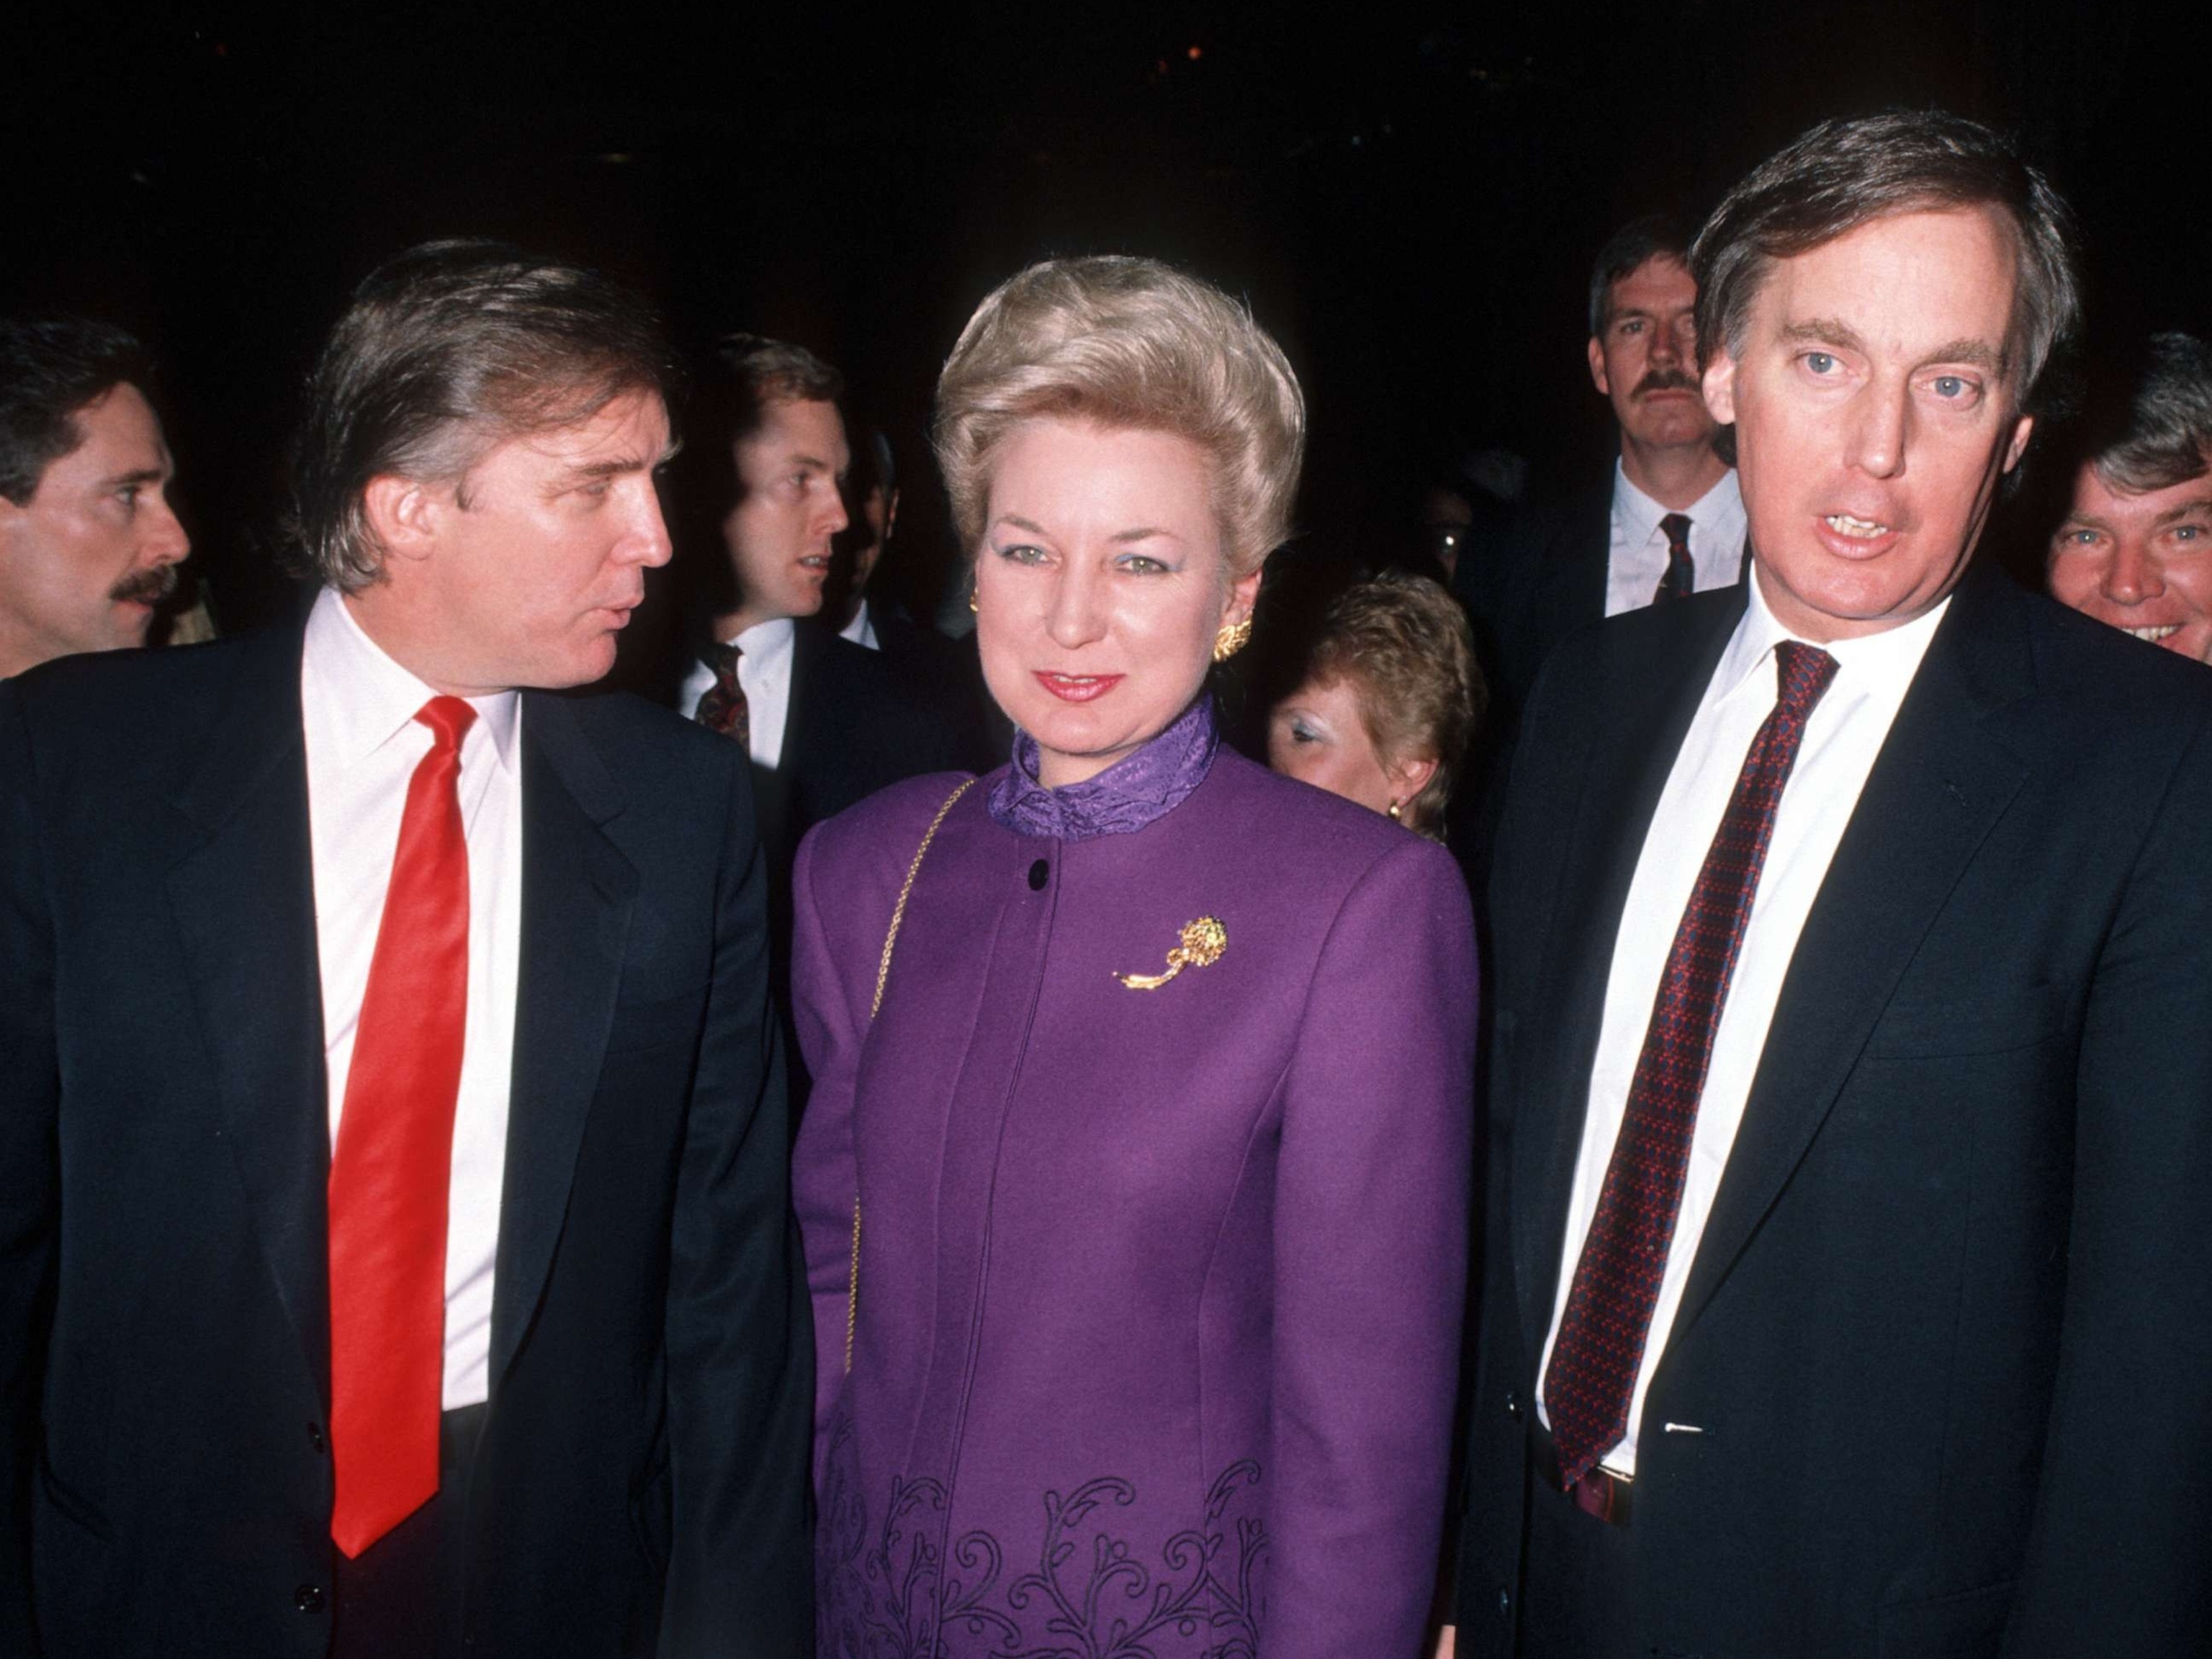 PHOTO: Donald Trump, Maryanne Trump, and Robert Trump during Opening of Donald Trump's Taj Mahal Casino in April 5, 1990 at Taj Mahal Hotel and Casino in Atlantic City, N.J.